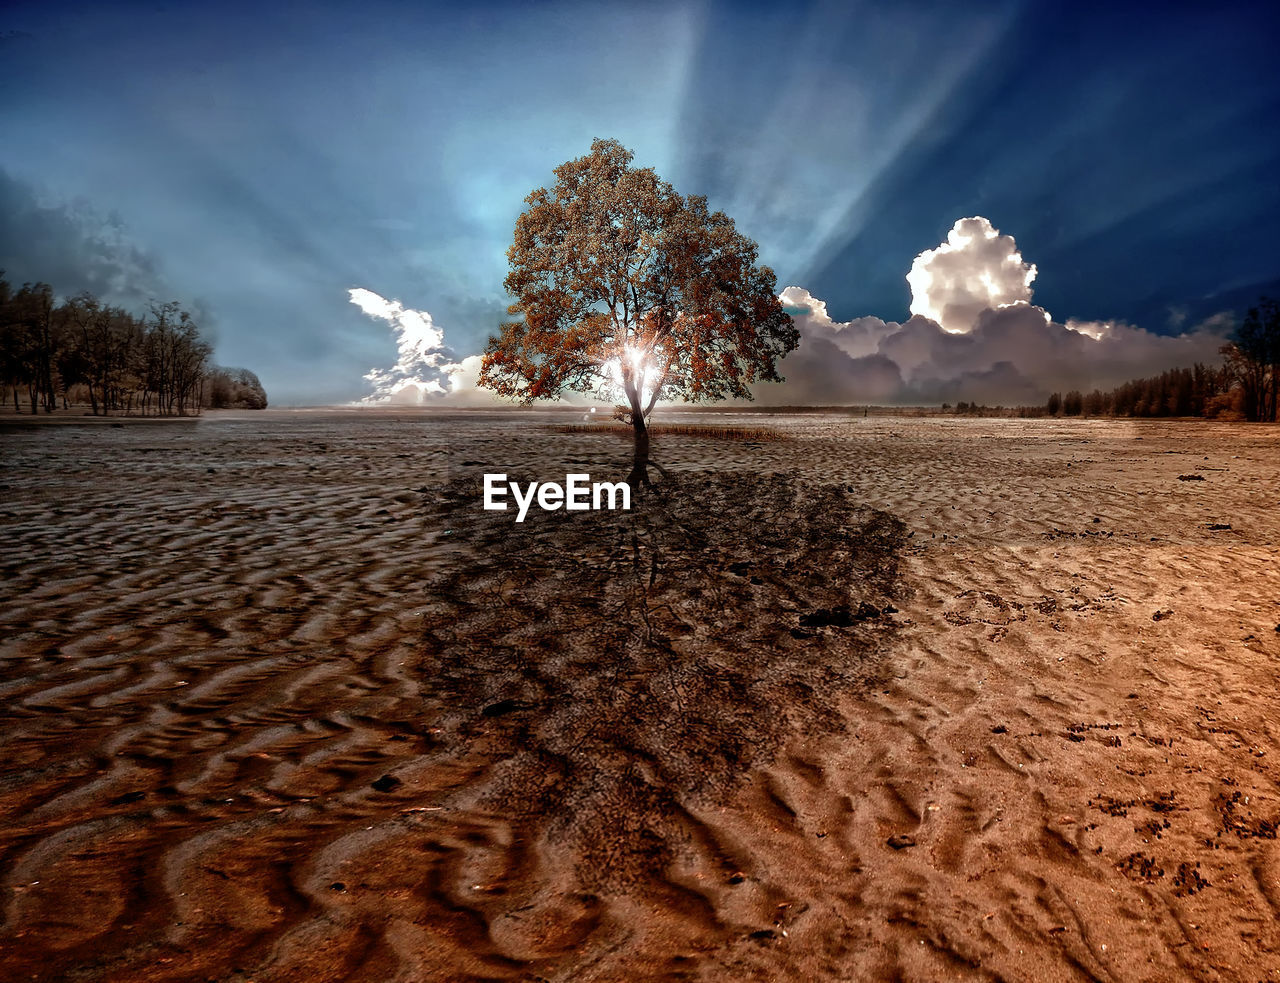 SCENIC VIEW OF DESERT AGAINST TREES ON FIELD